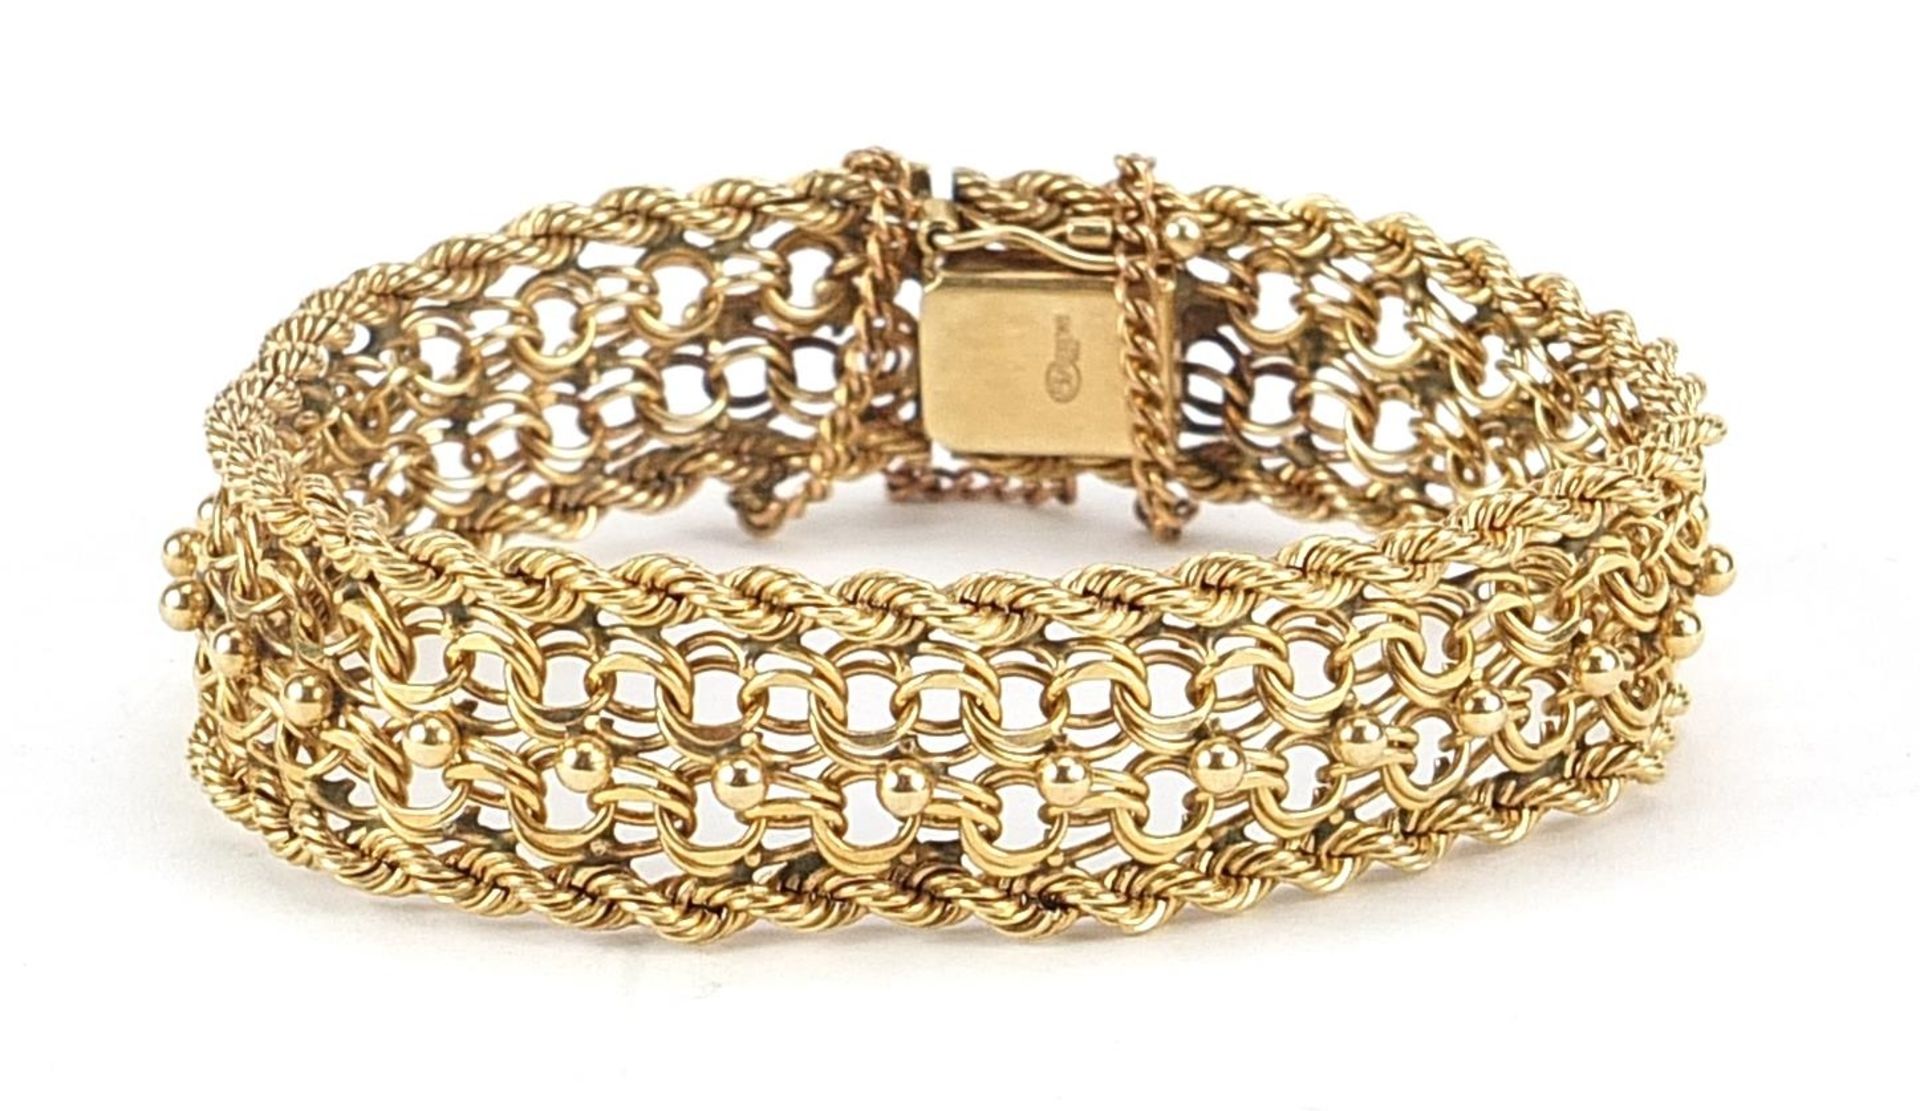 American 14ct gold multi link bracelet, 20cm in length, 37.3g